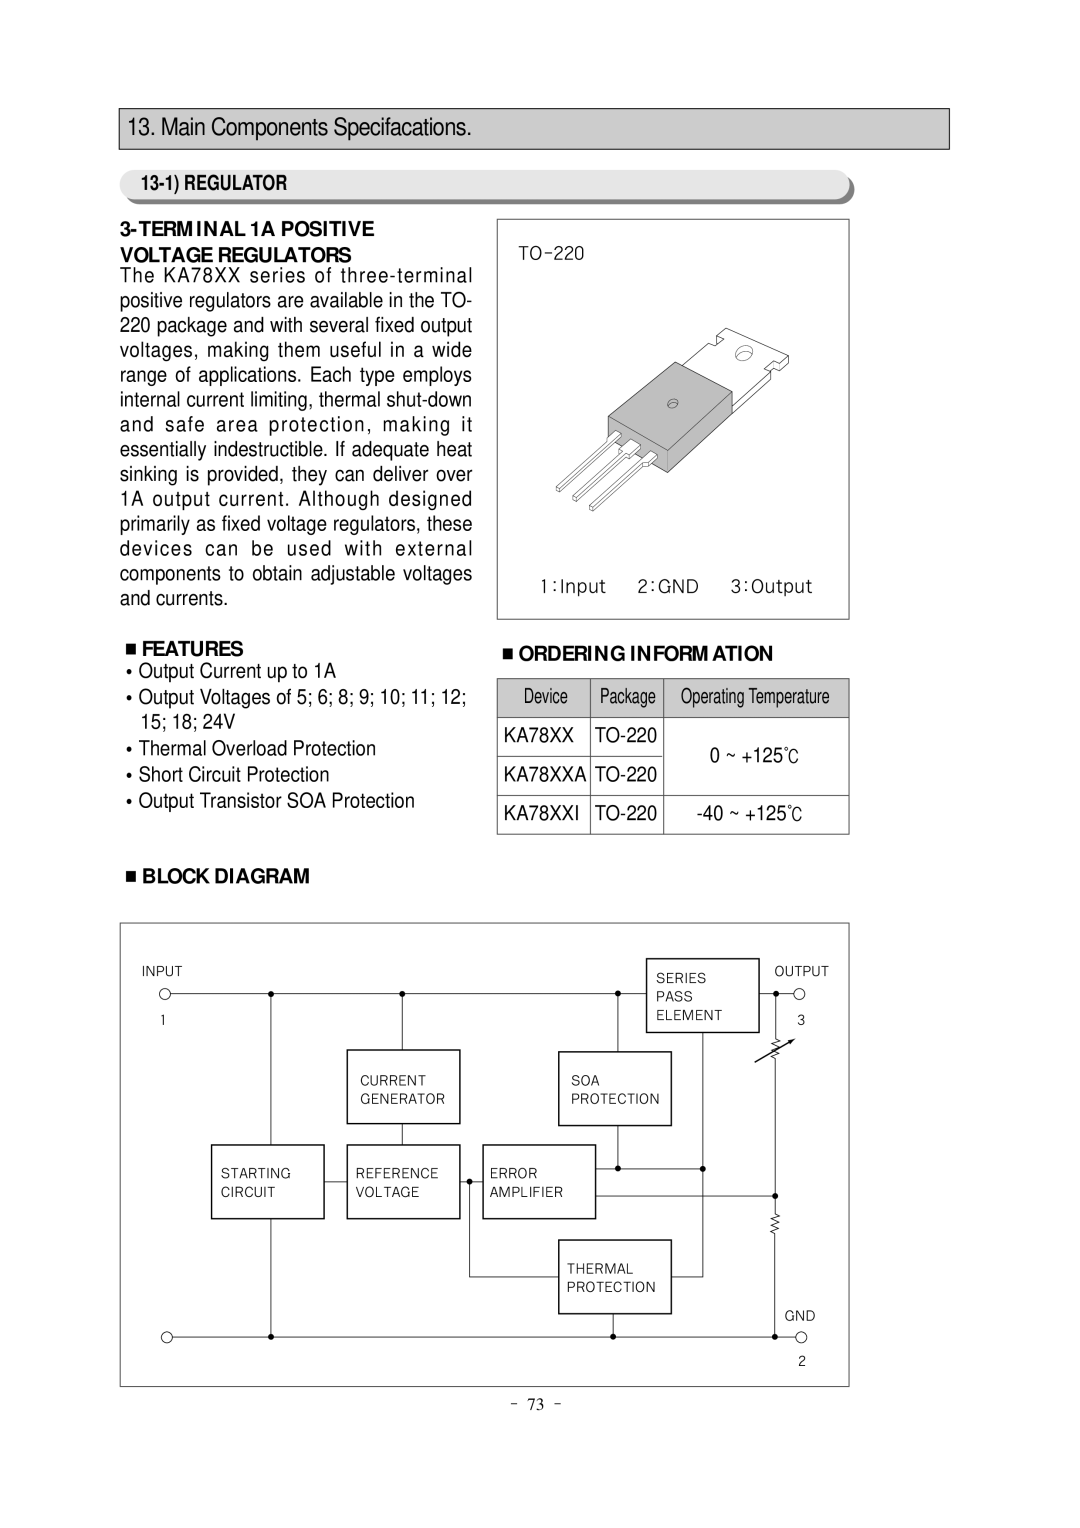 Samsung SR-61KTC, SR-65KTC Main Components Specifacations, Features, Ordering Information, Block Diagram, 13-1REGULATOR 